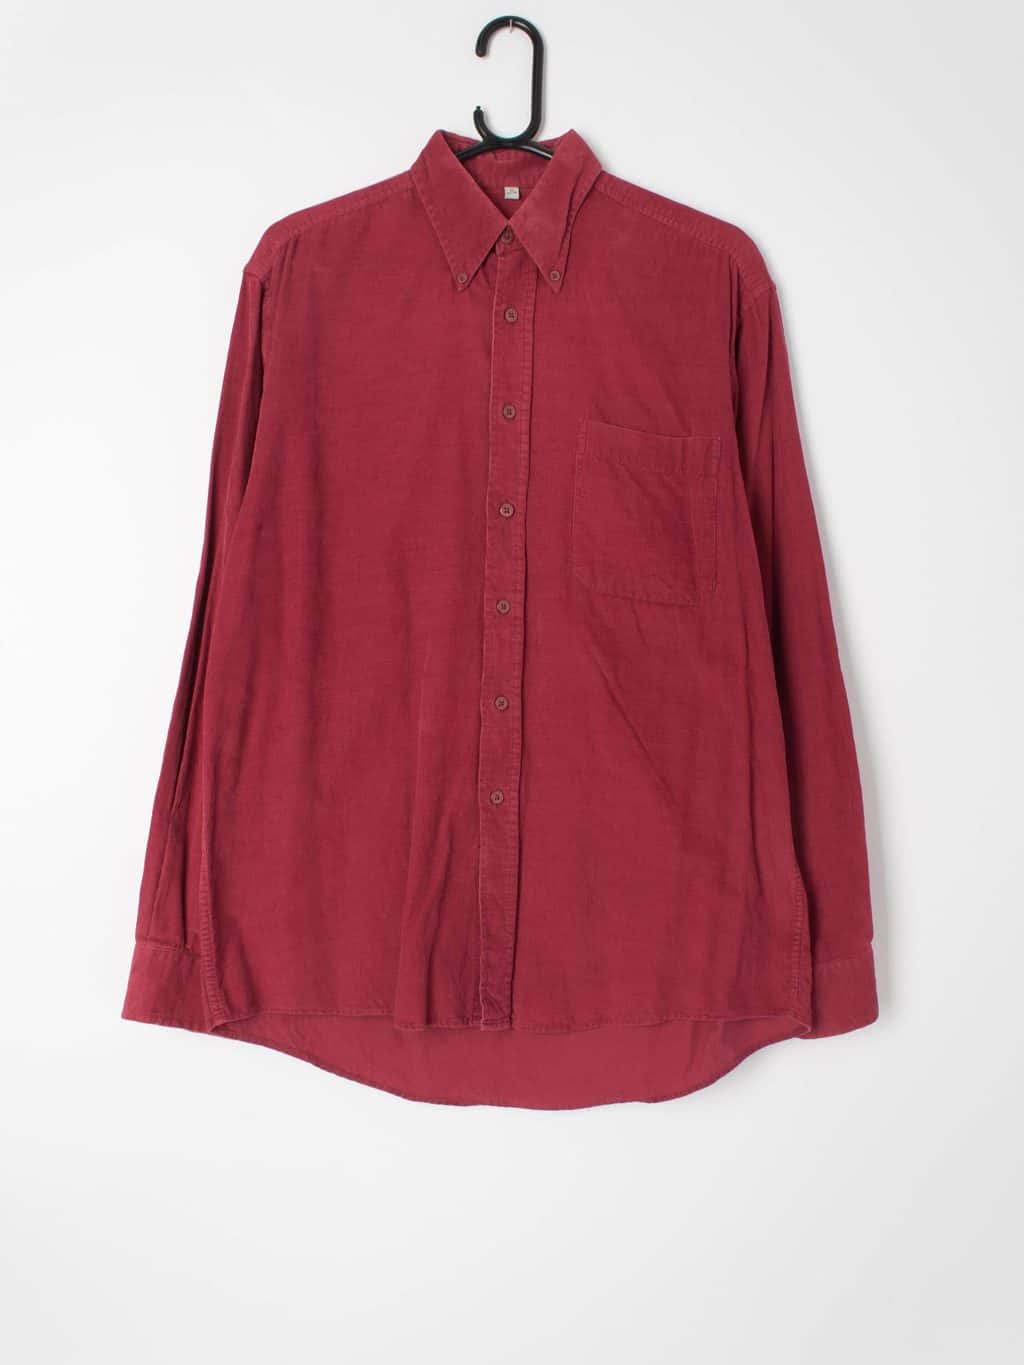 Mens vintage red plain corduroy shirt by Le Frog 100% cotton - Medium ...